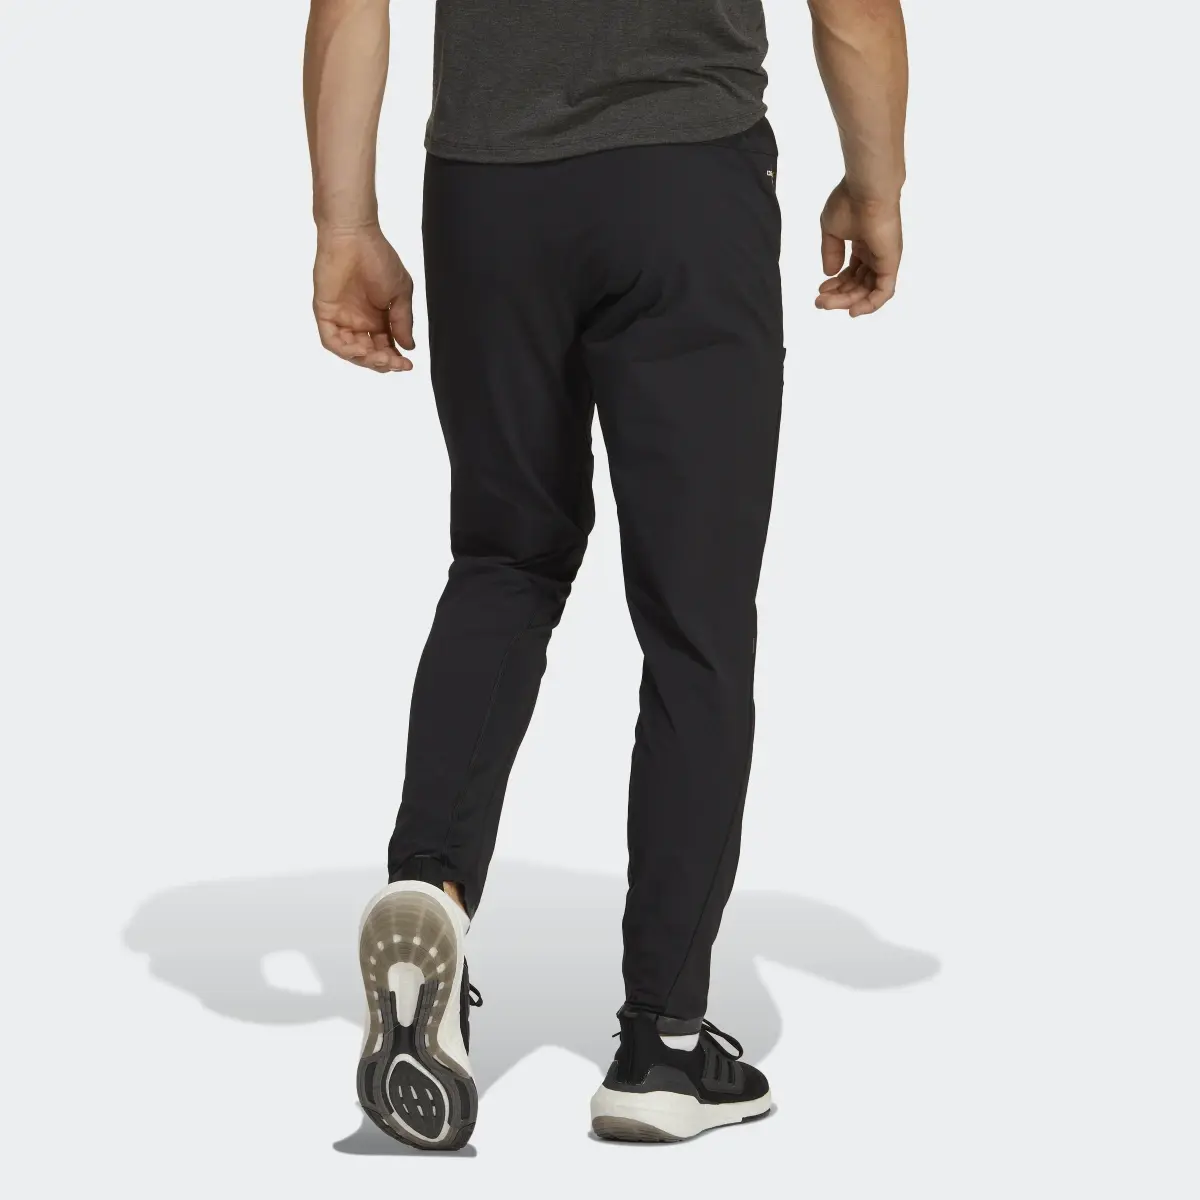 Adidas Designed for Training CORDURA® Workout Pants. 2